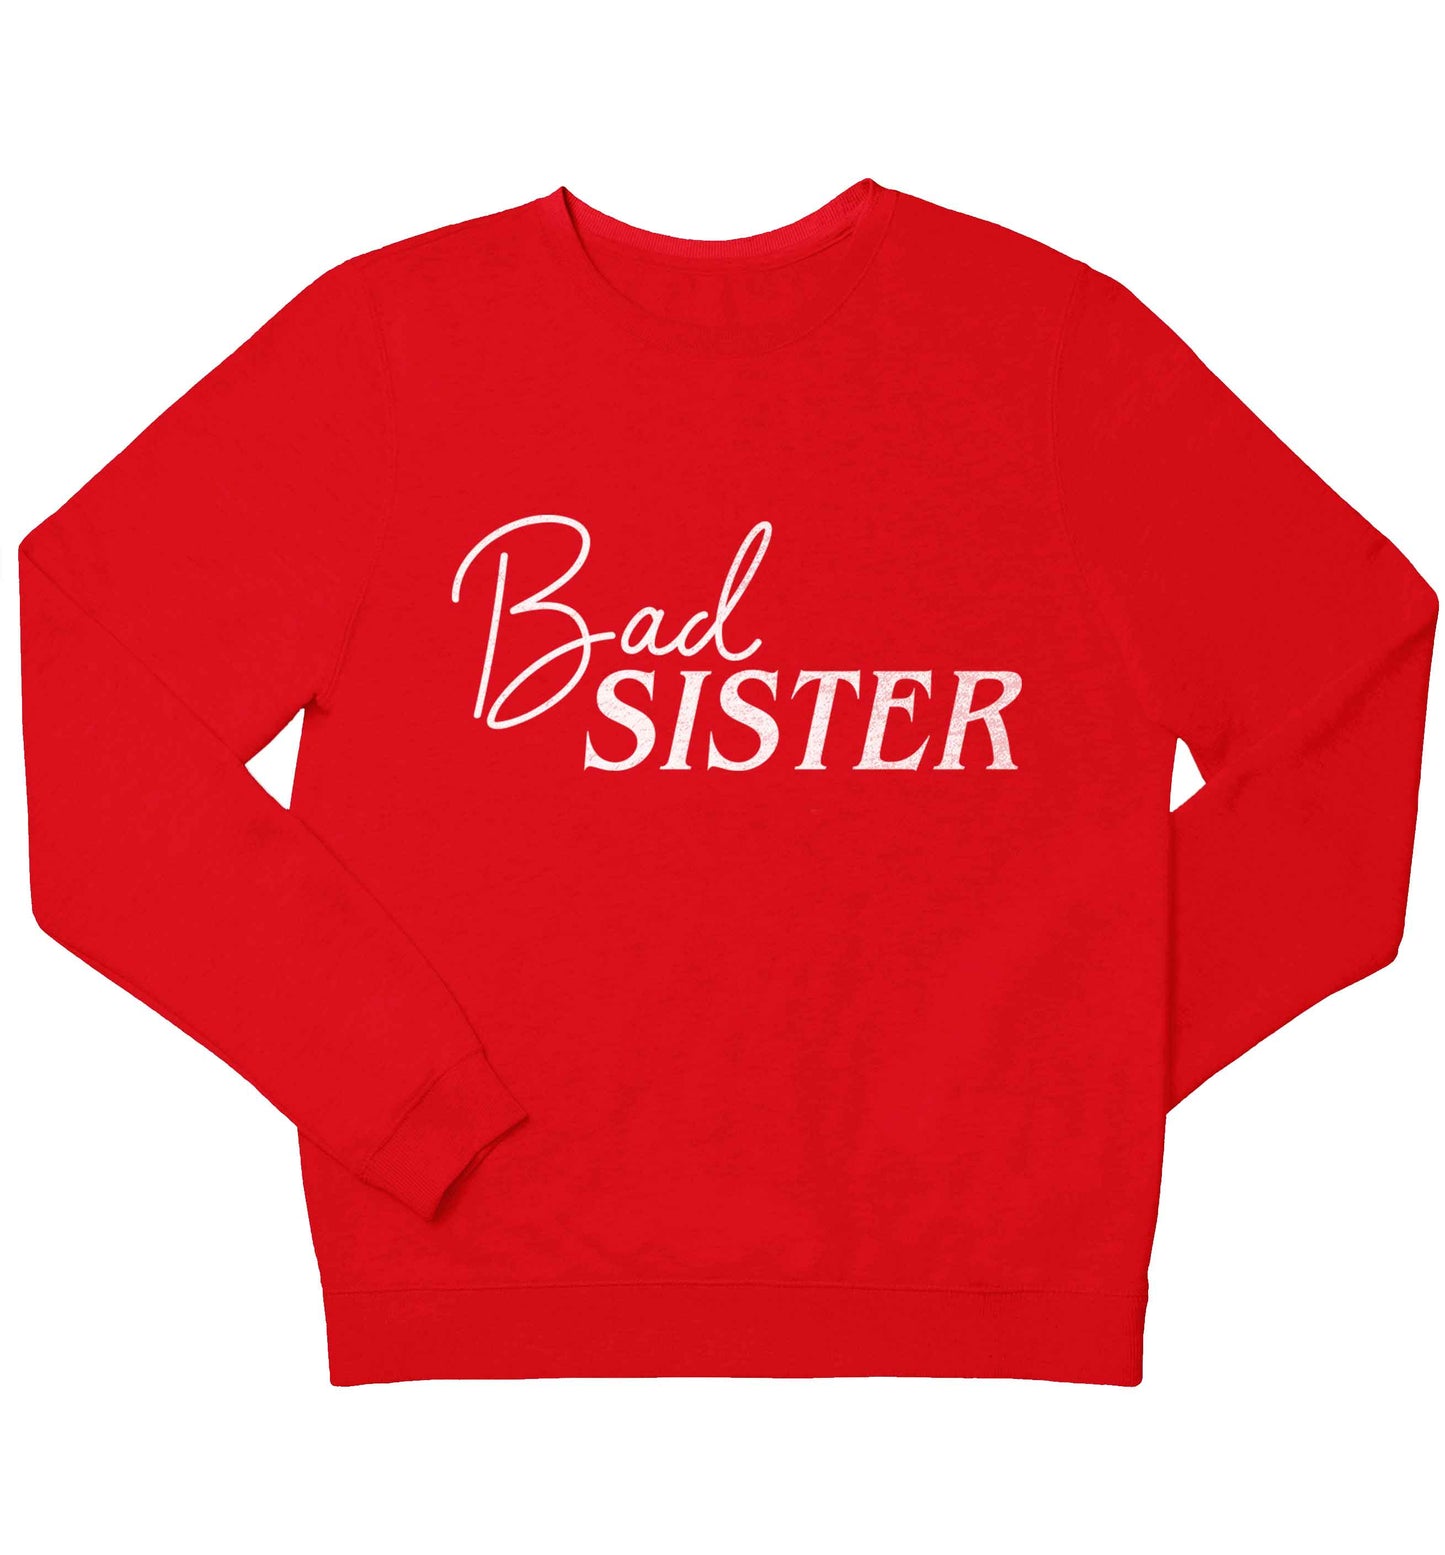 Bad sister children's grey sweater 12-13 Years